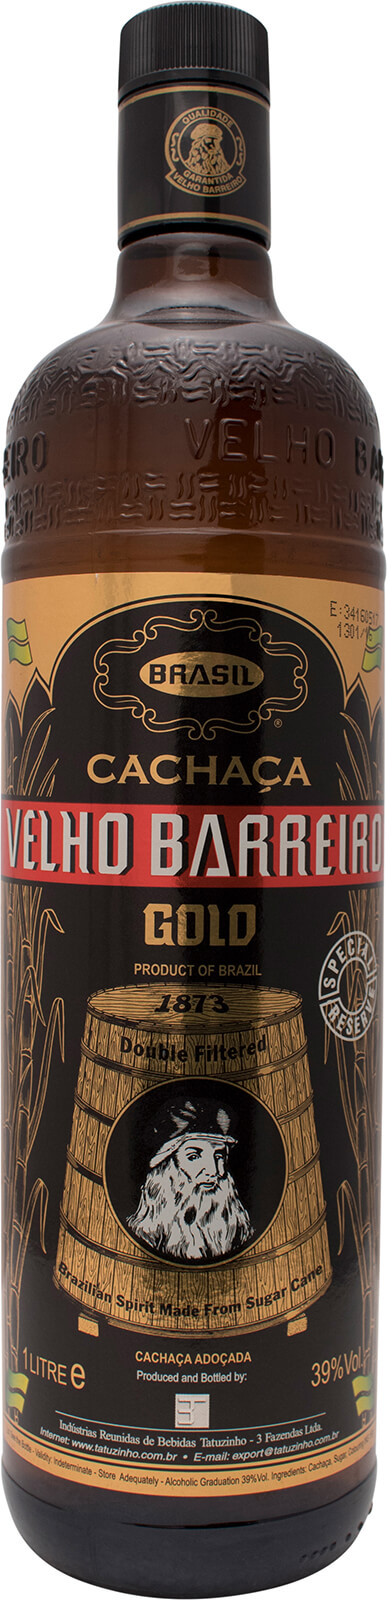 Velho Barreiro Cachaca 1 Jahre) (3 39% Gold Liter